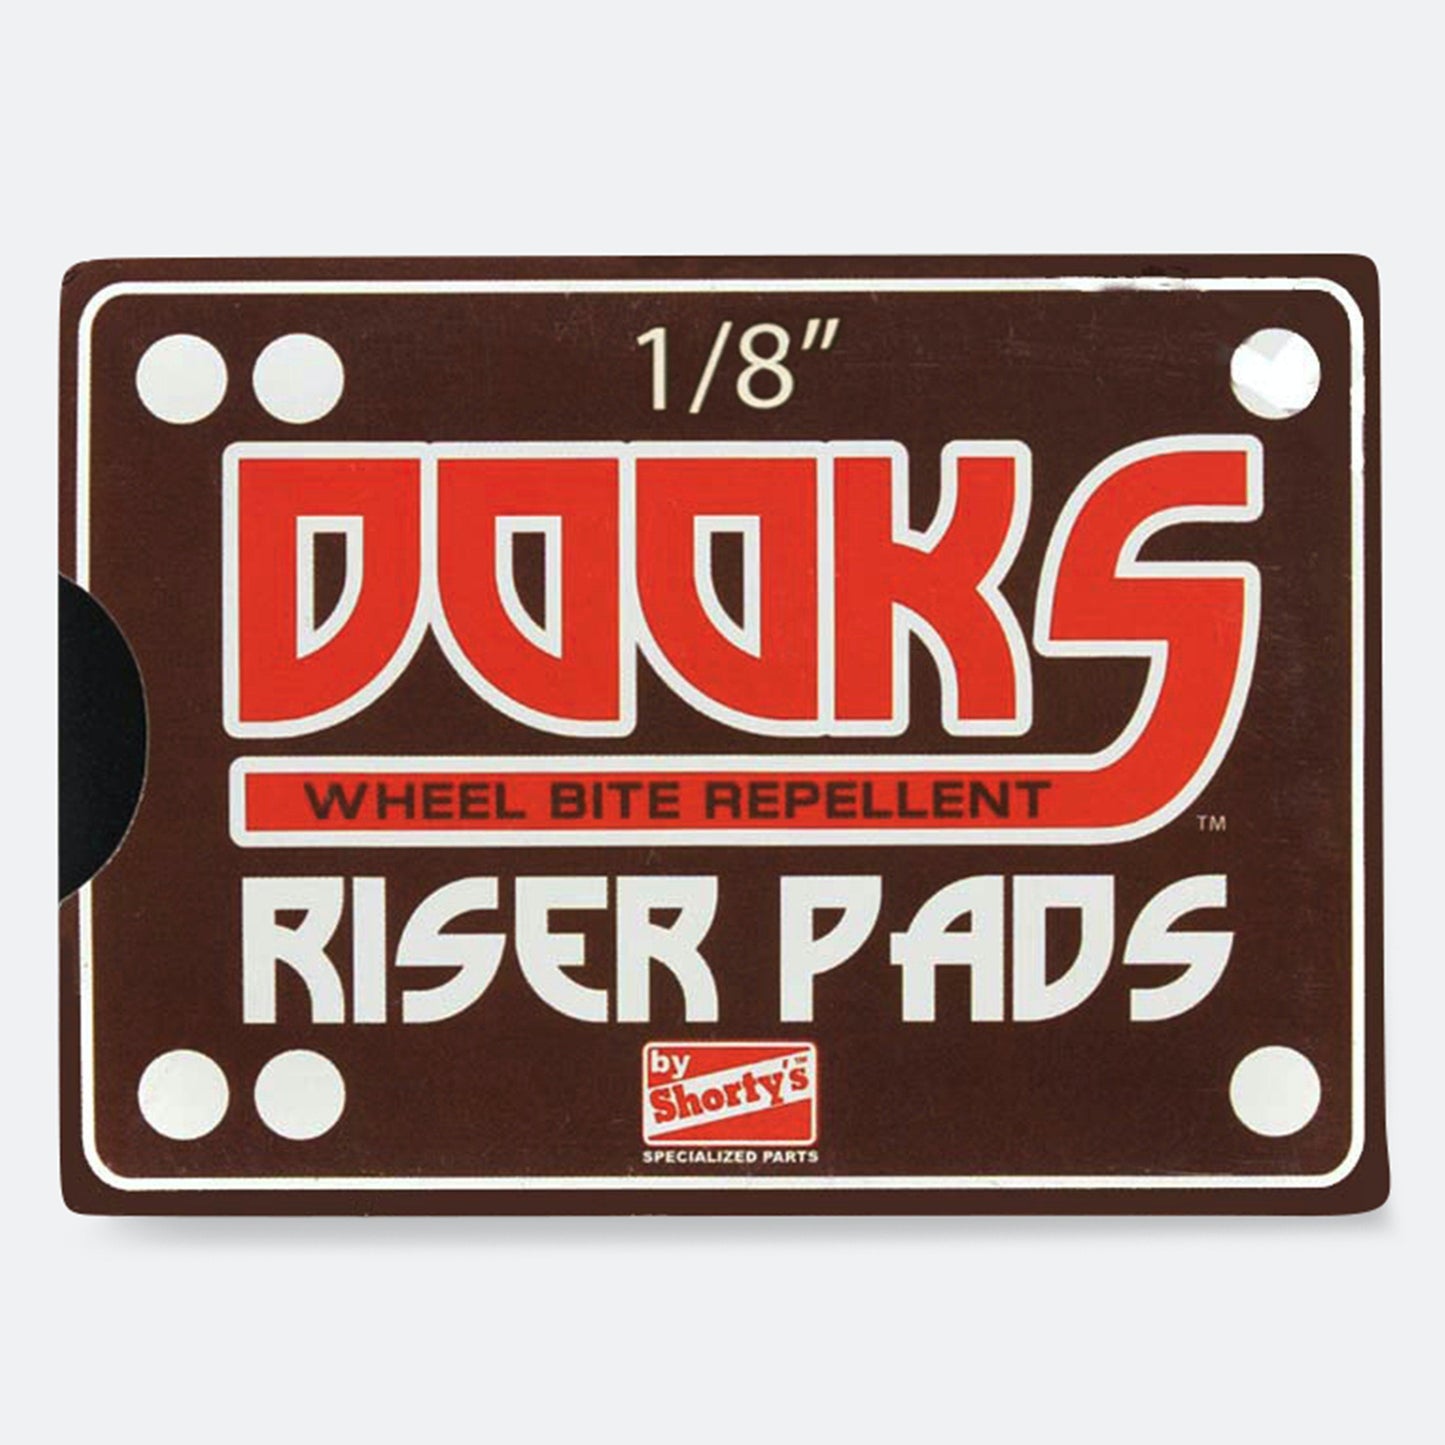 Shortys - Dooks Riser Pads 1/8"